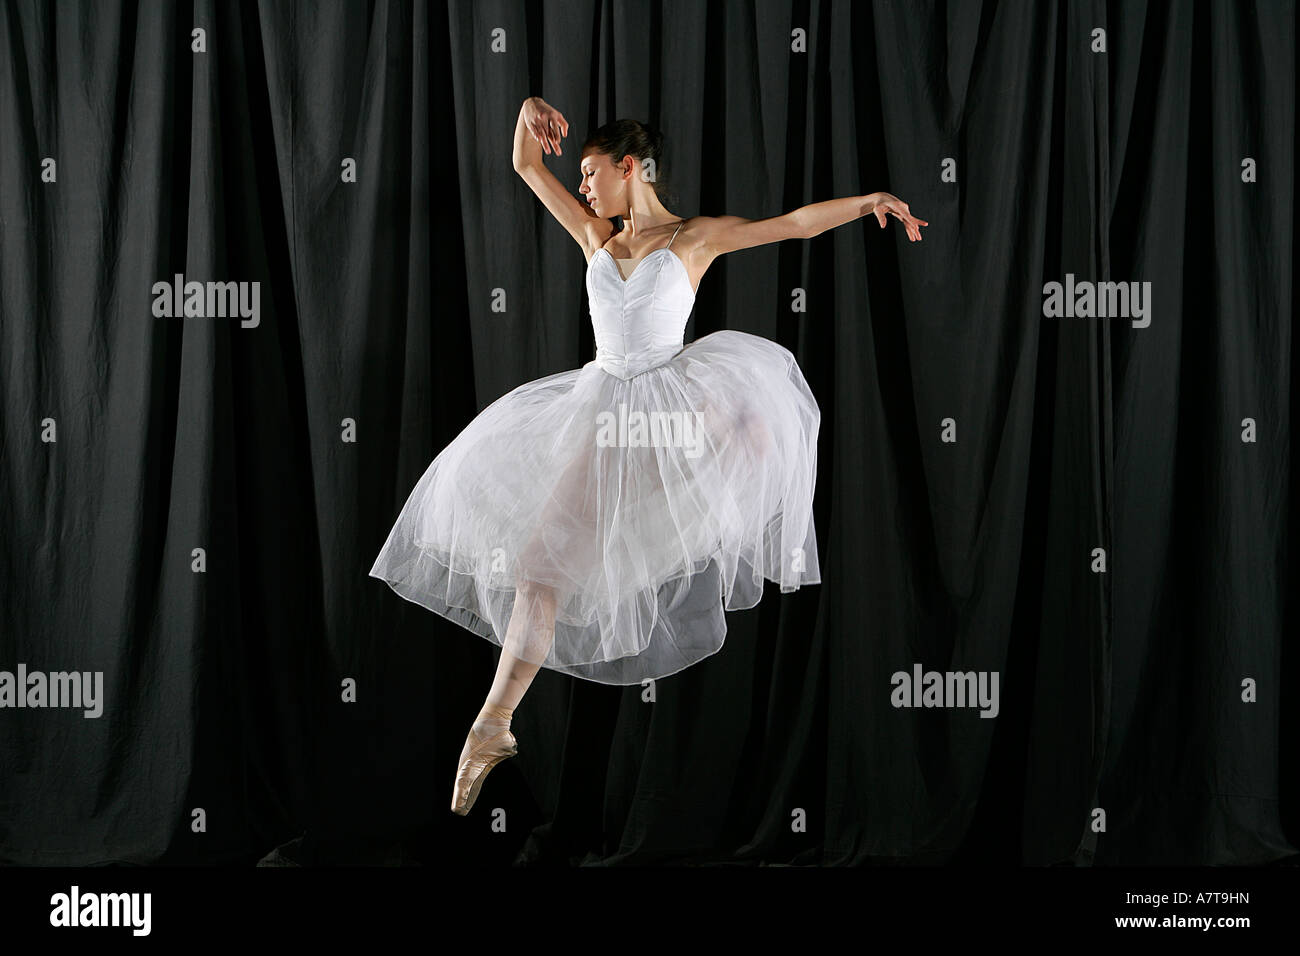 Ballerina leaping dance show performance Stock Photo - Alamy